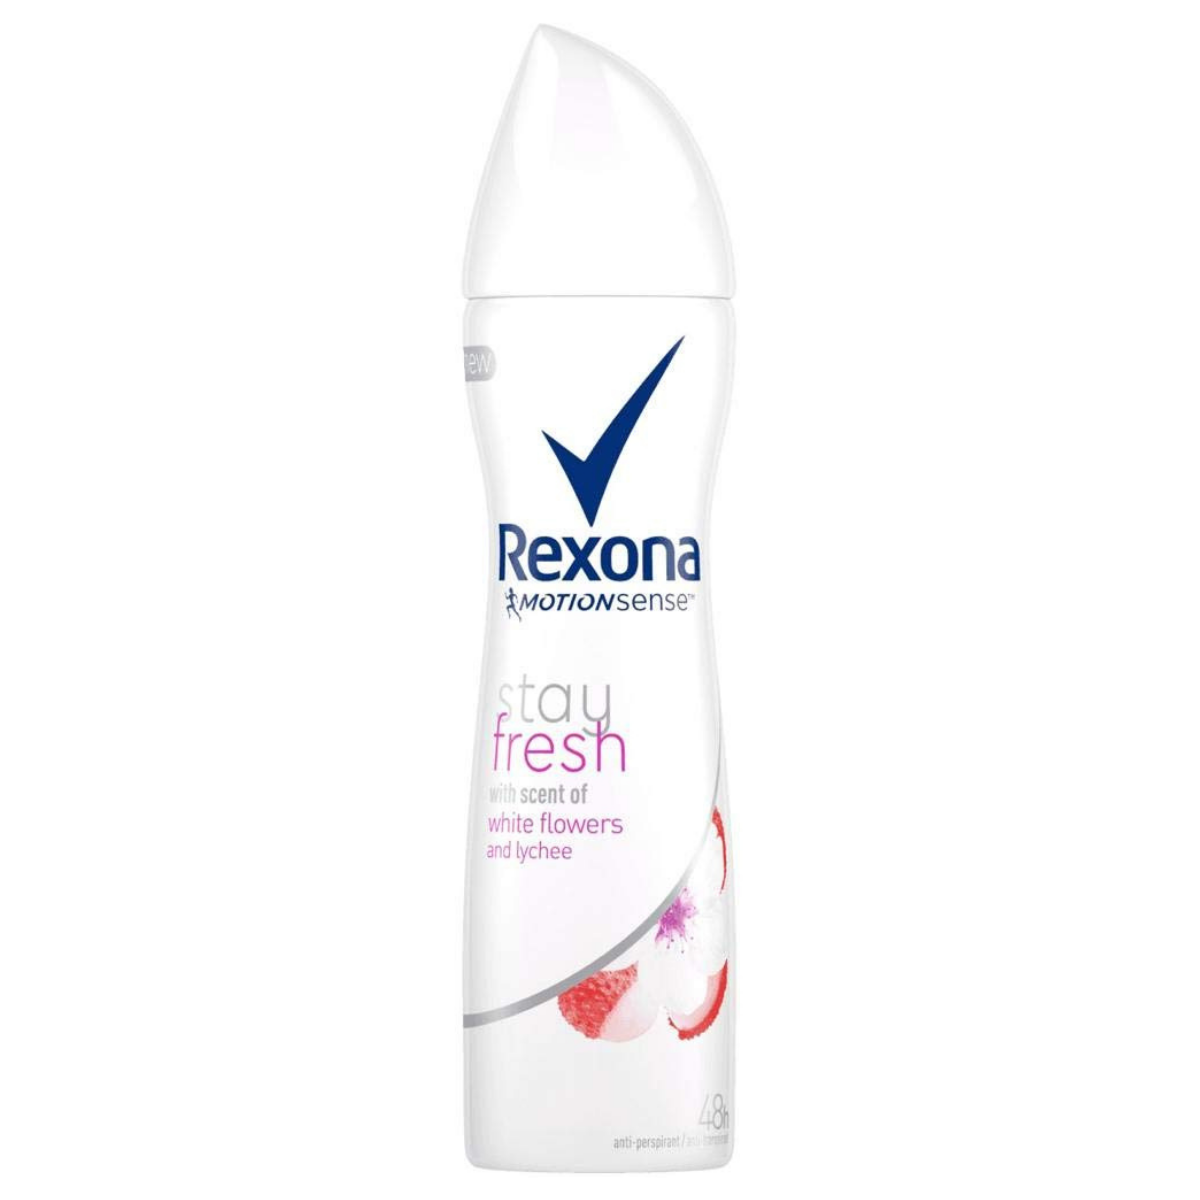 Primary image of Rexona Stay Fresh Deodorant Spray